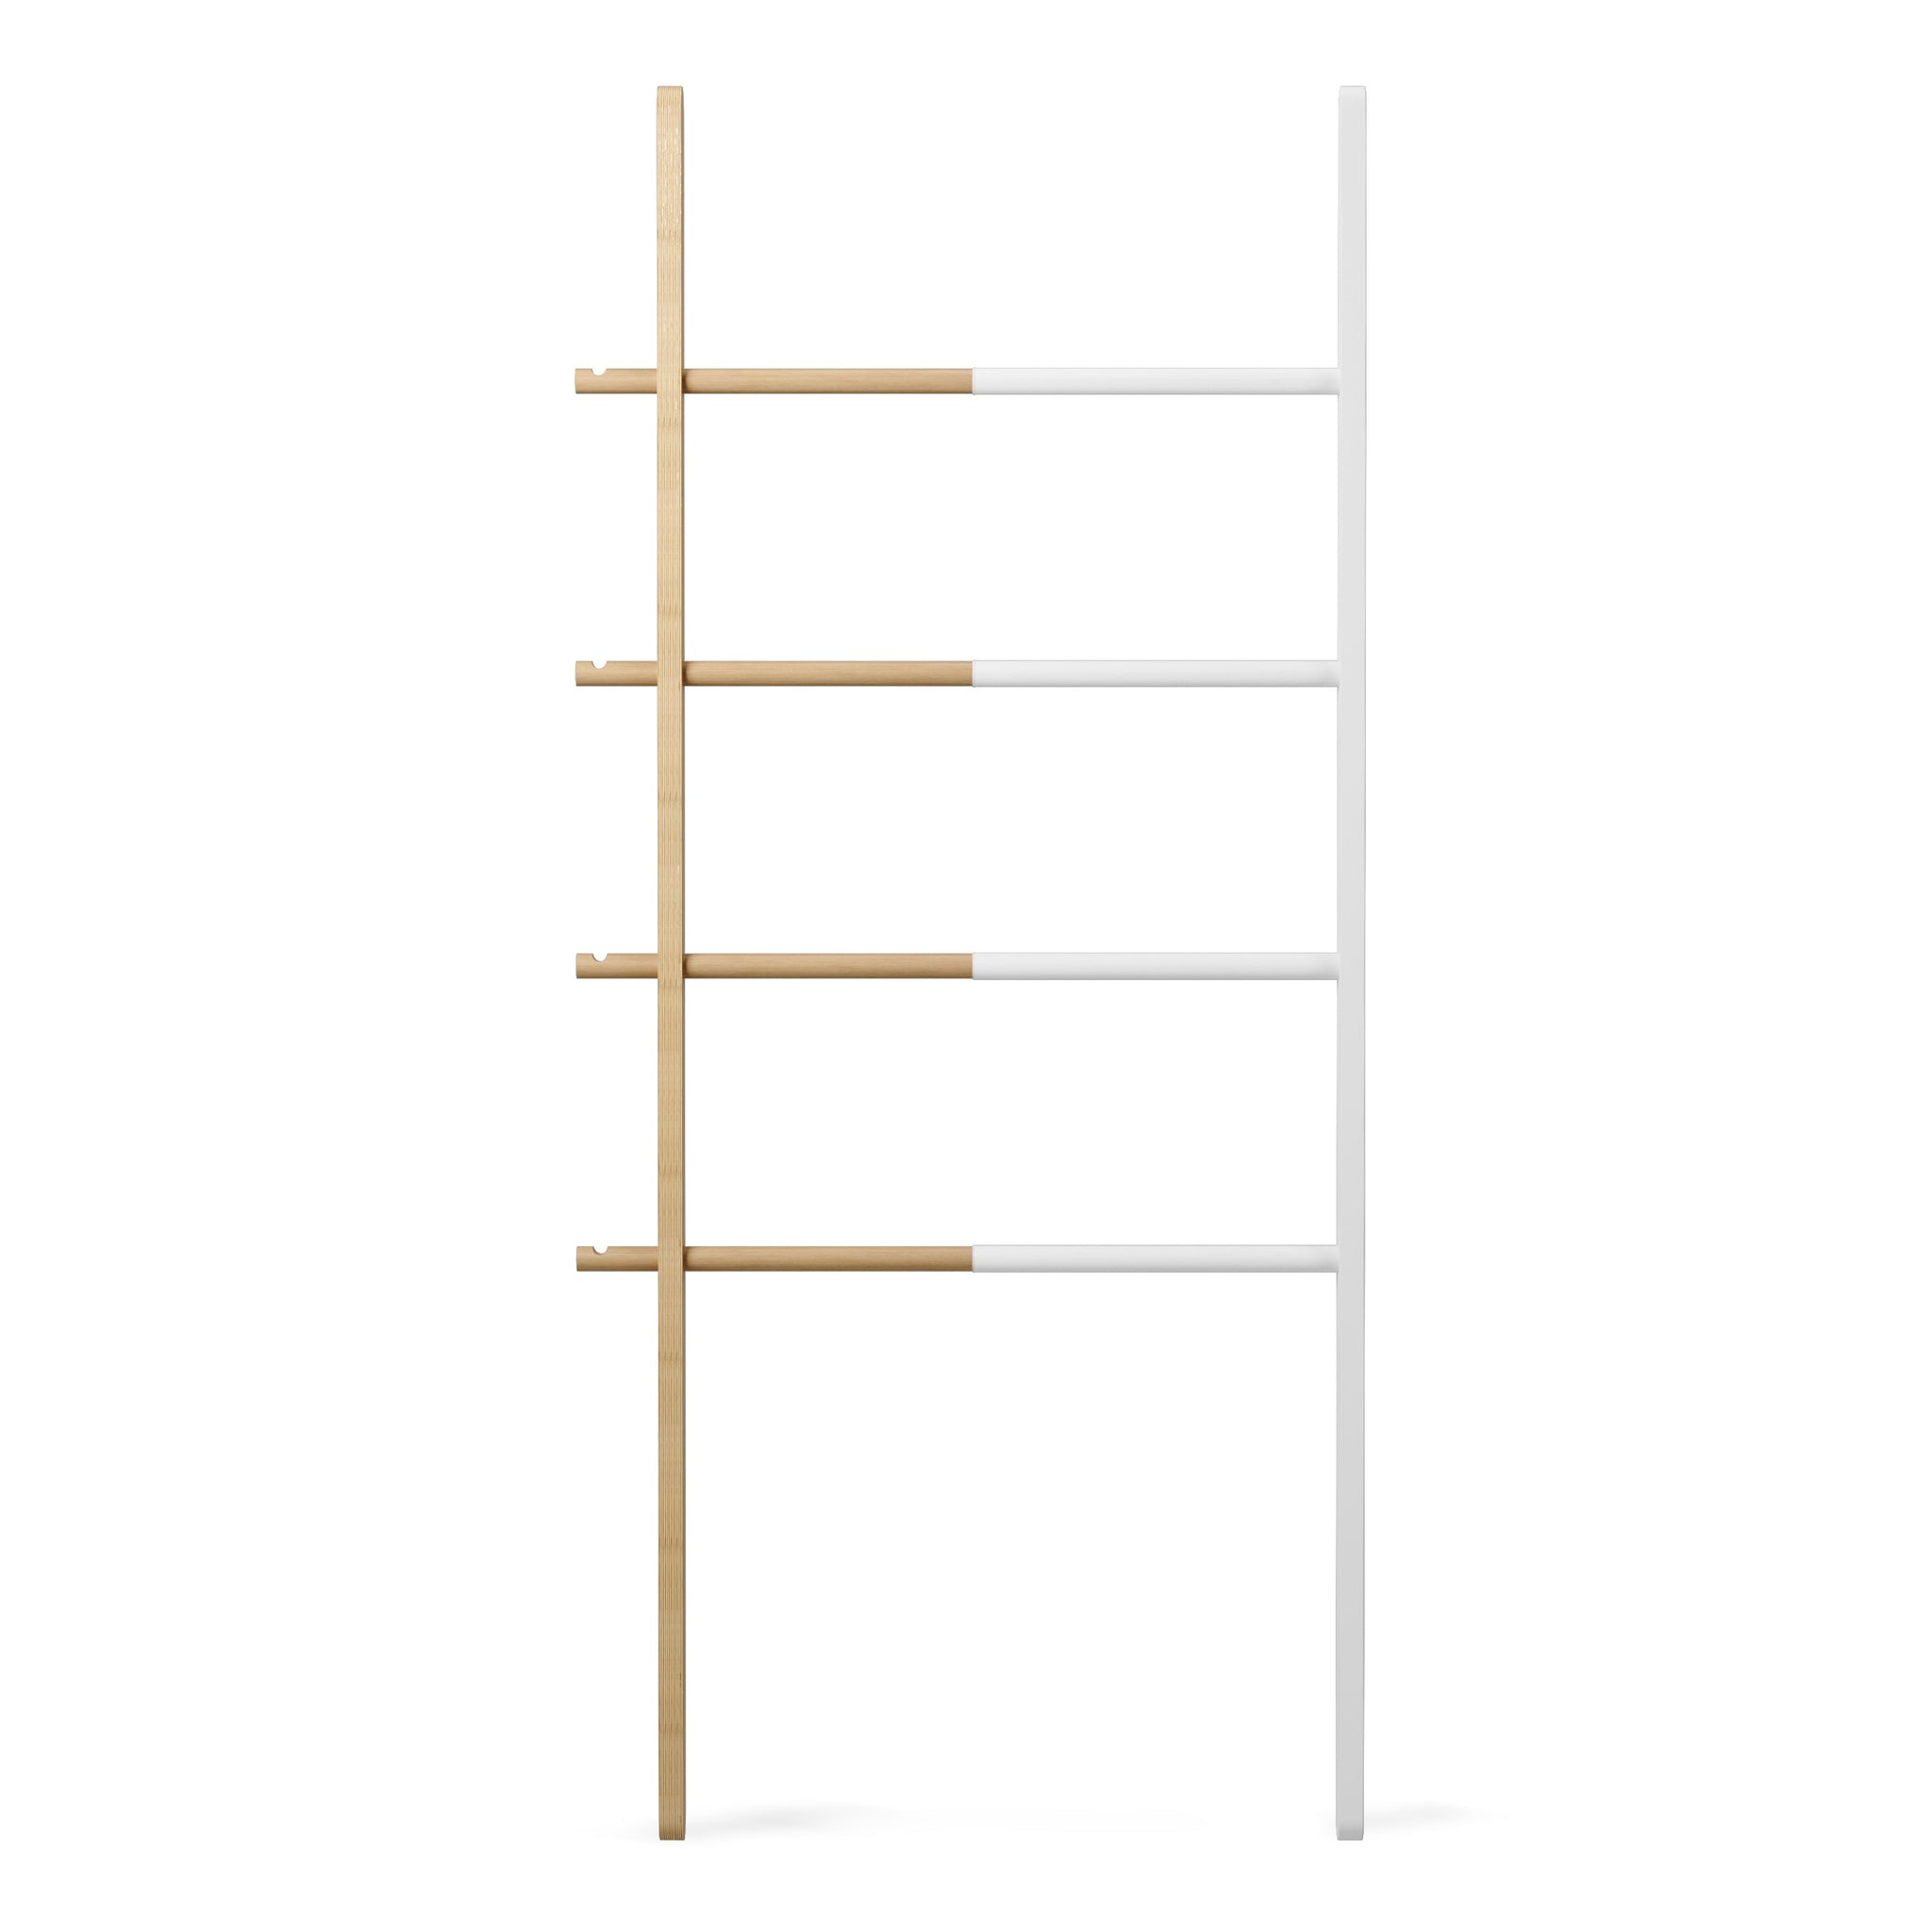 Hub Storage Ladder